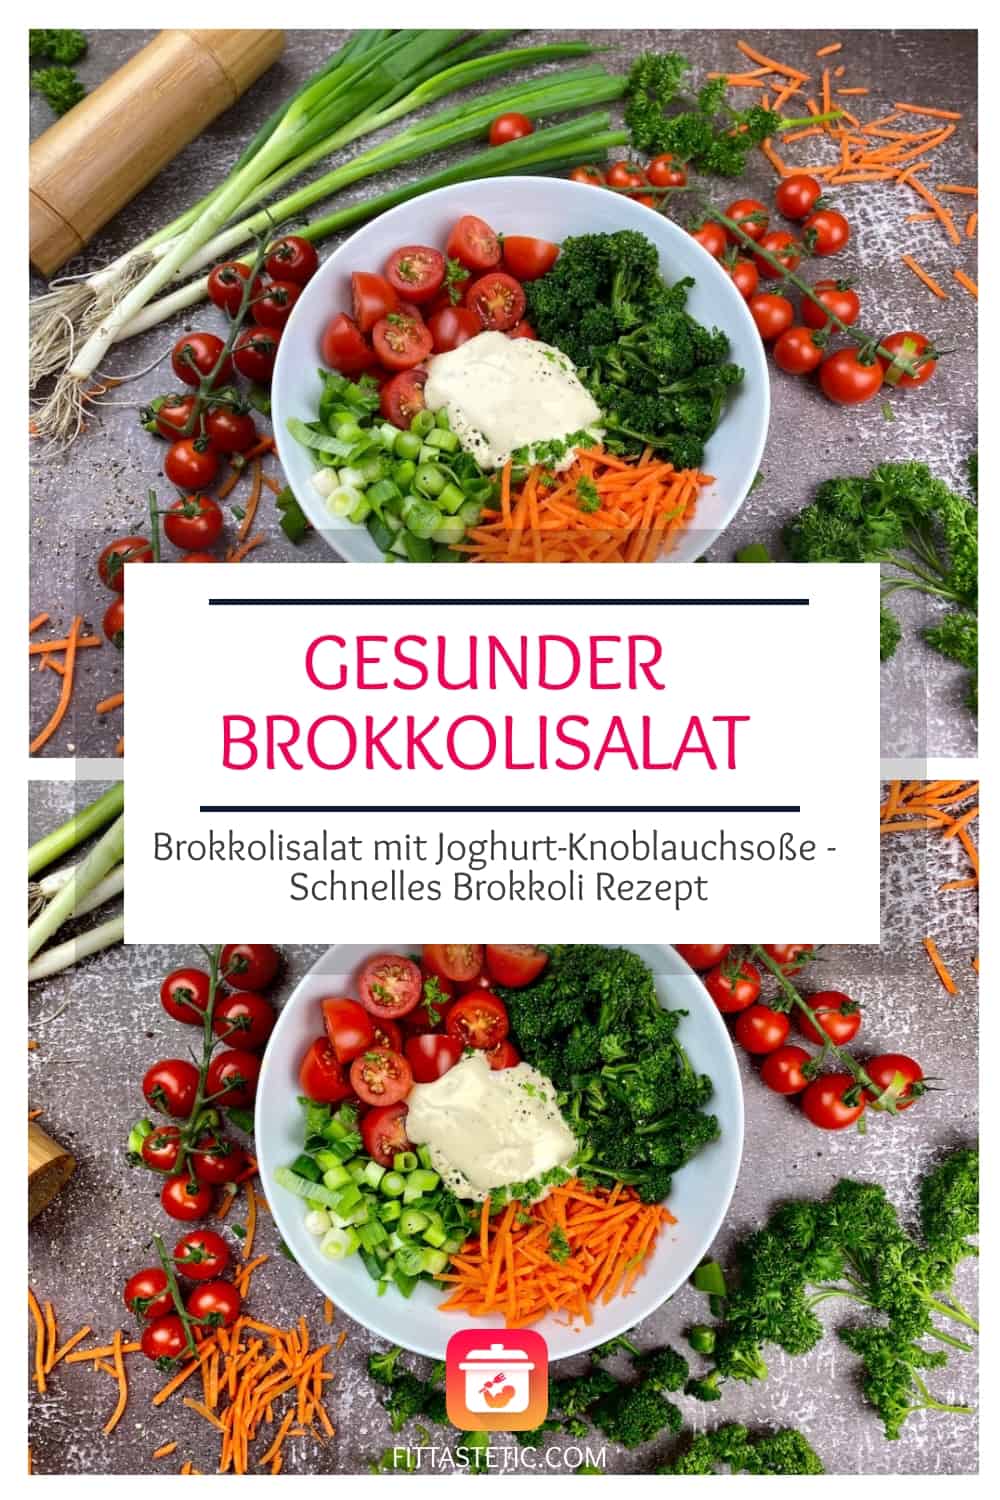 Gesunder Brokkolisalat mit Joghurt-Knoblauchsoße - Schnelles Brokkoli Rezept